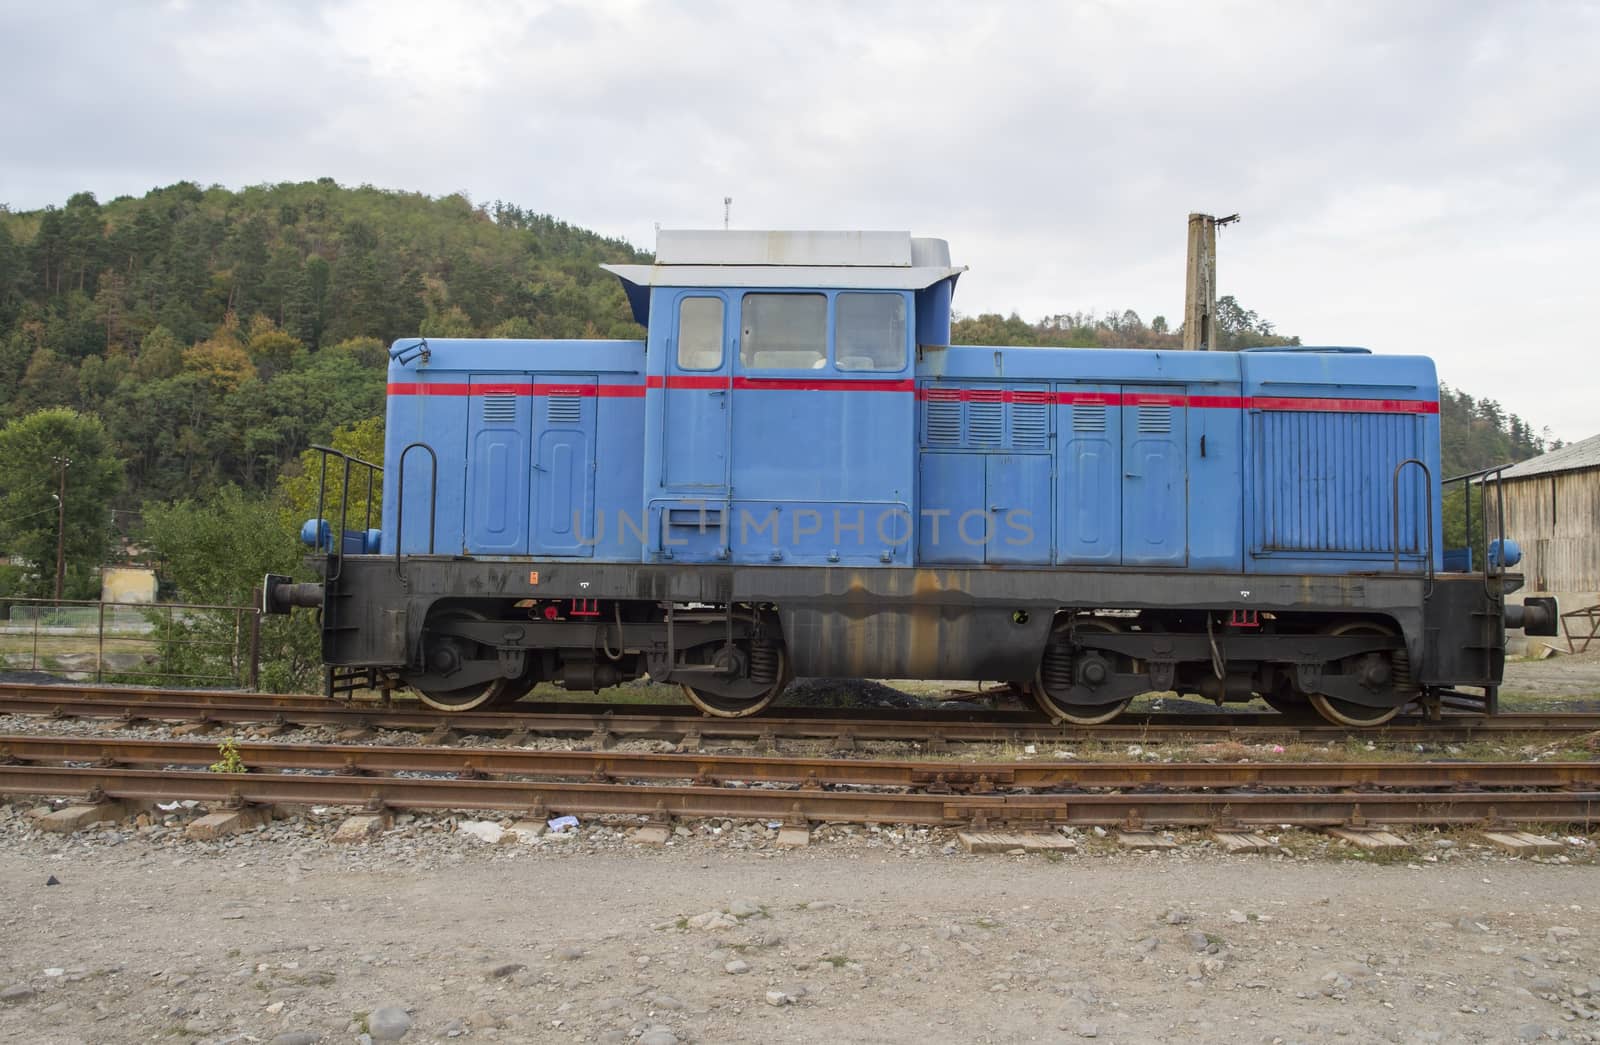 Old diesel railroad locomotive in depot